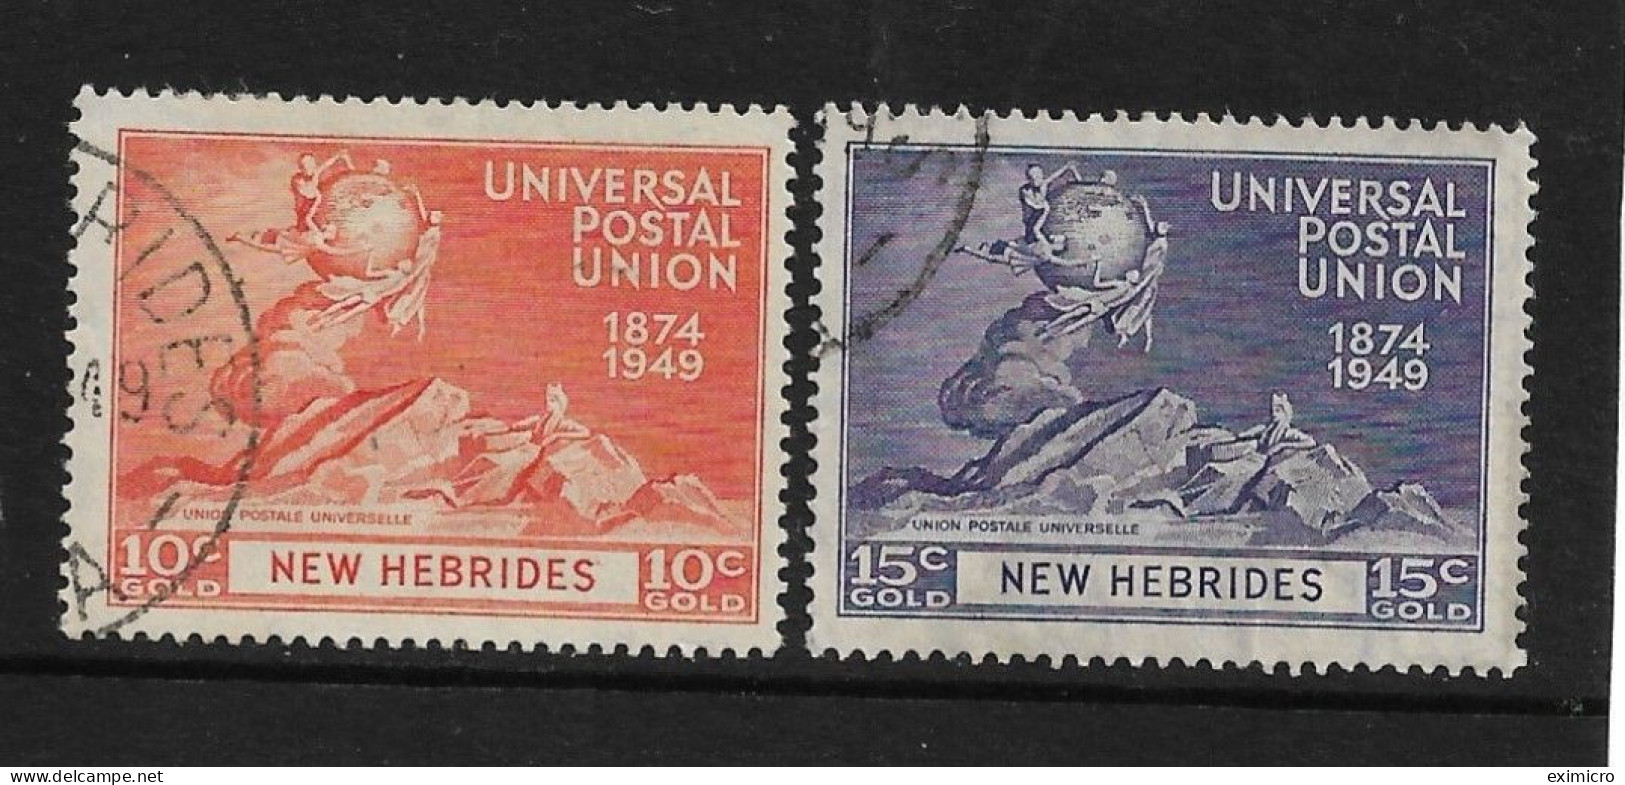 NEW HEBRIDES 1949 UPU 10c, 15c SG 64/65 FINE USED Cat £3 - Used Stamps